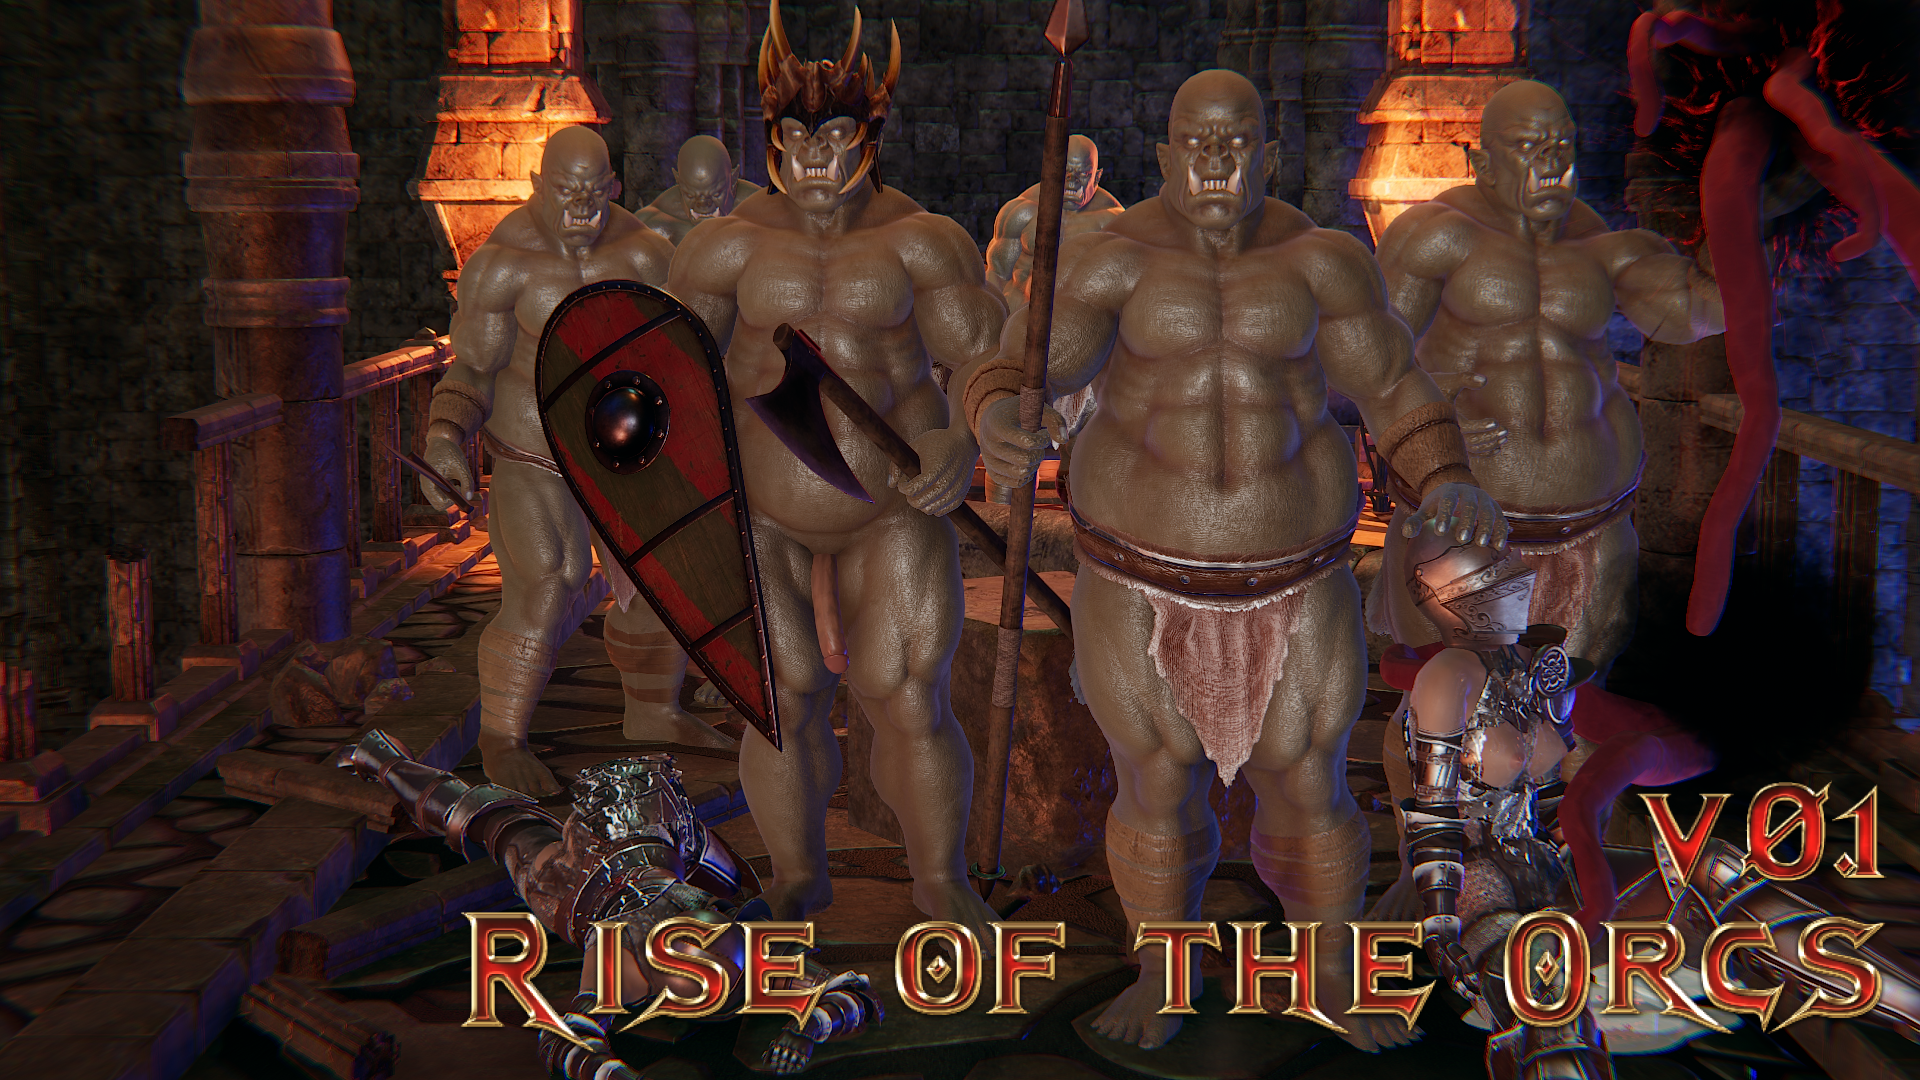 Rise of the orcs v0.1 - free game download, reviews, mega - xGames